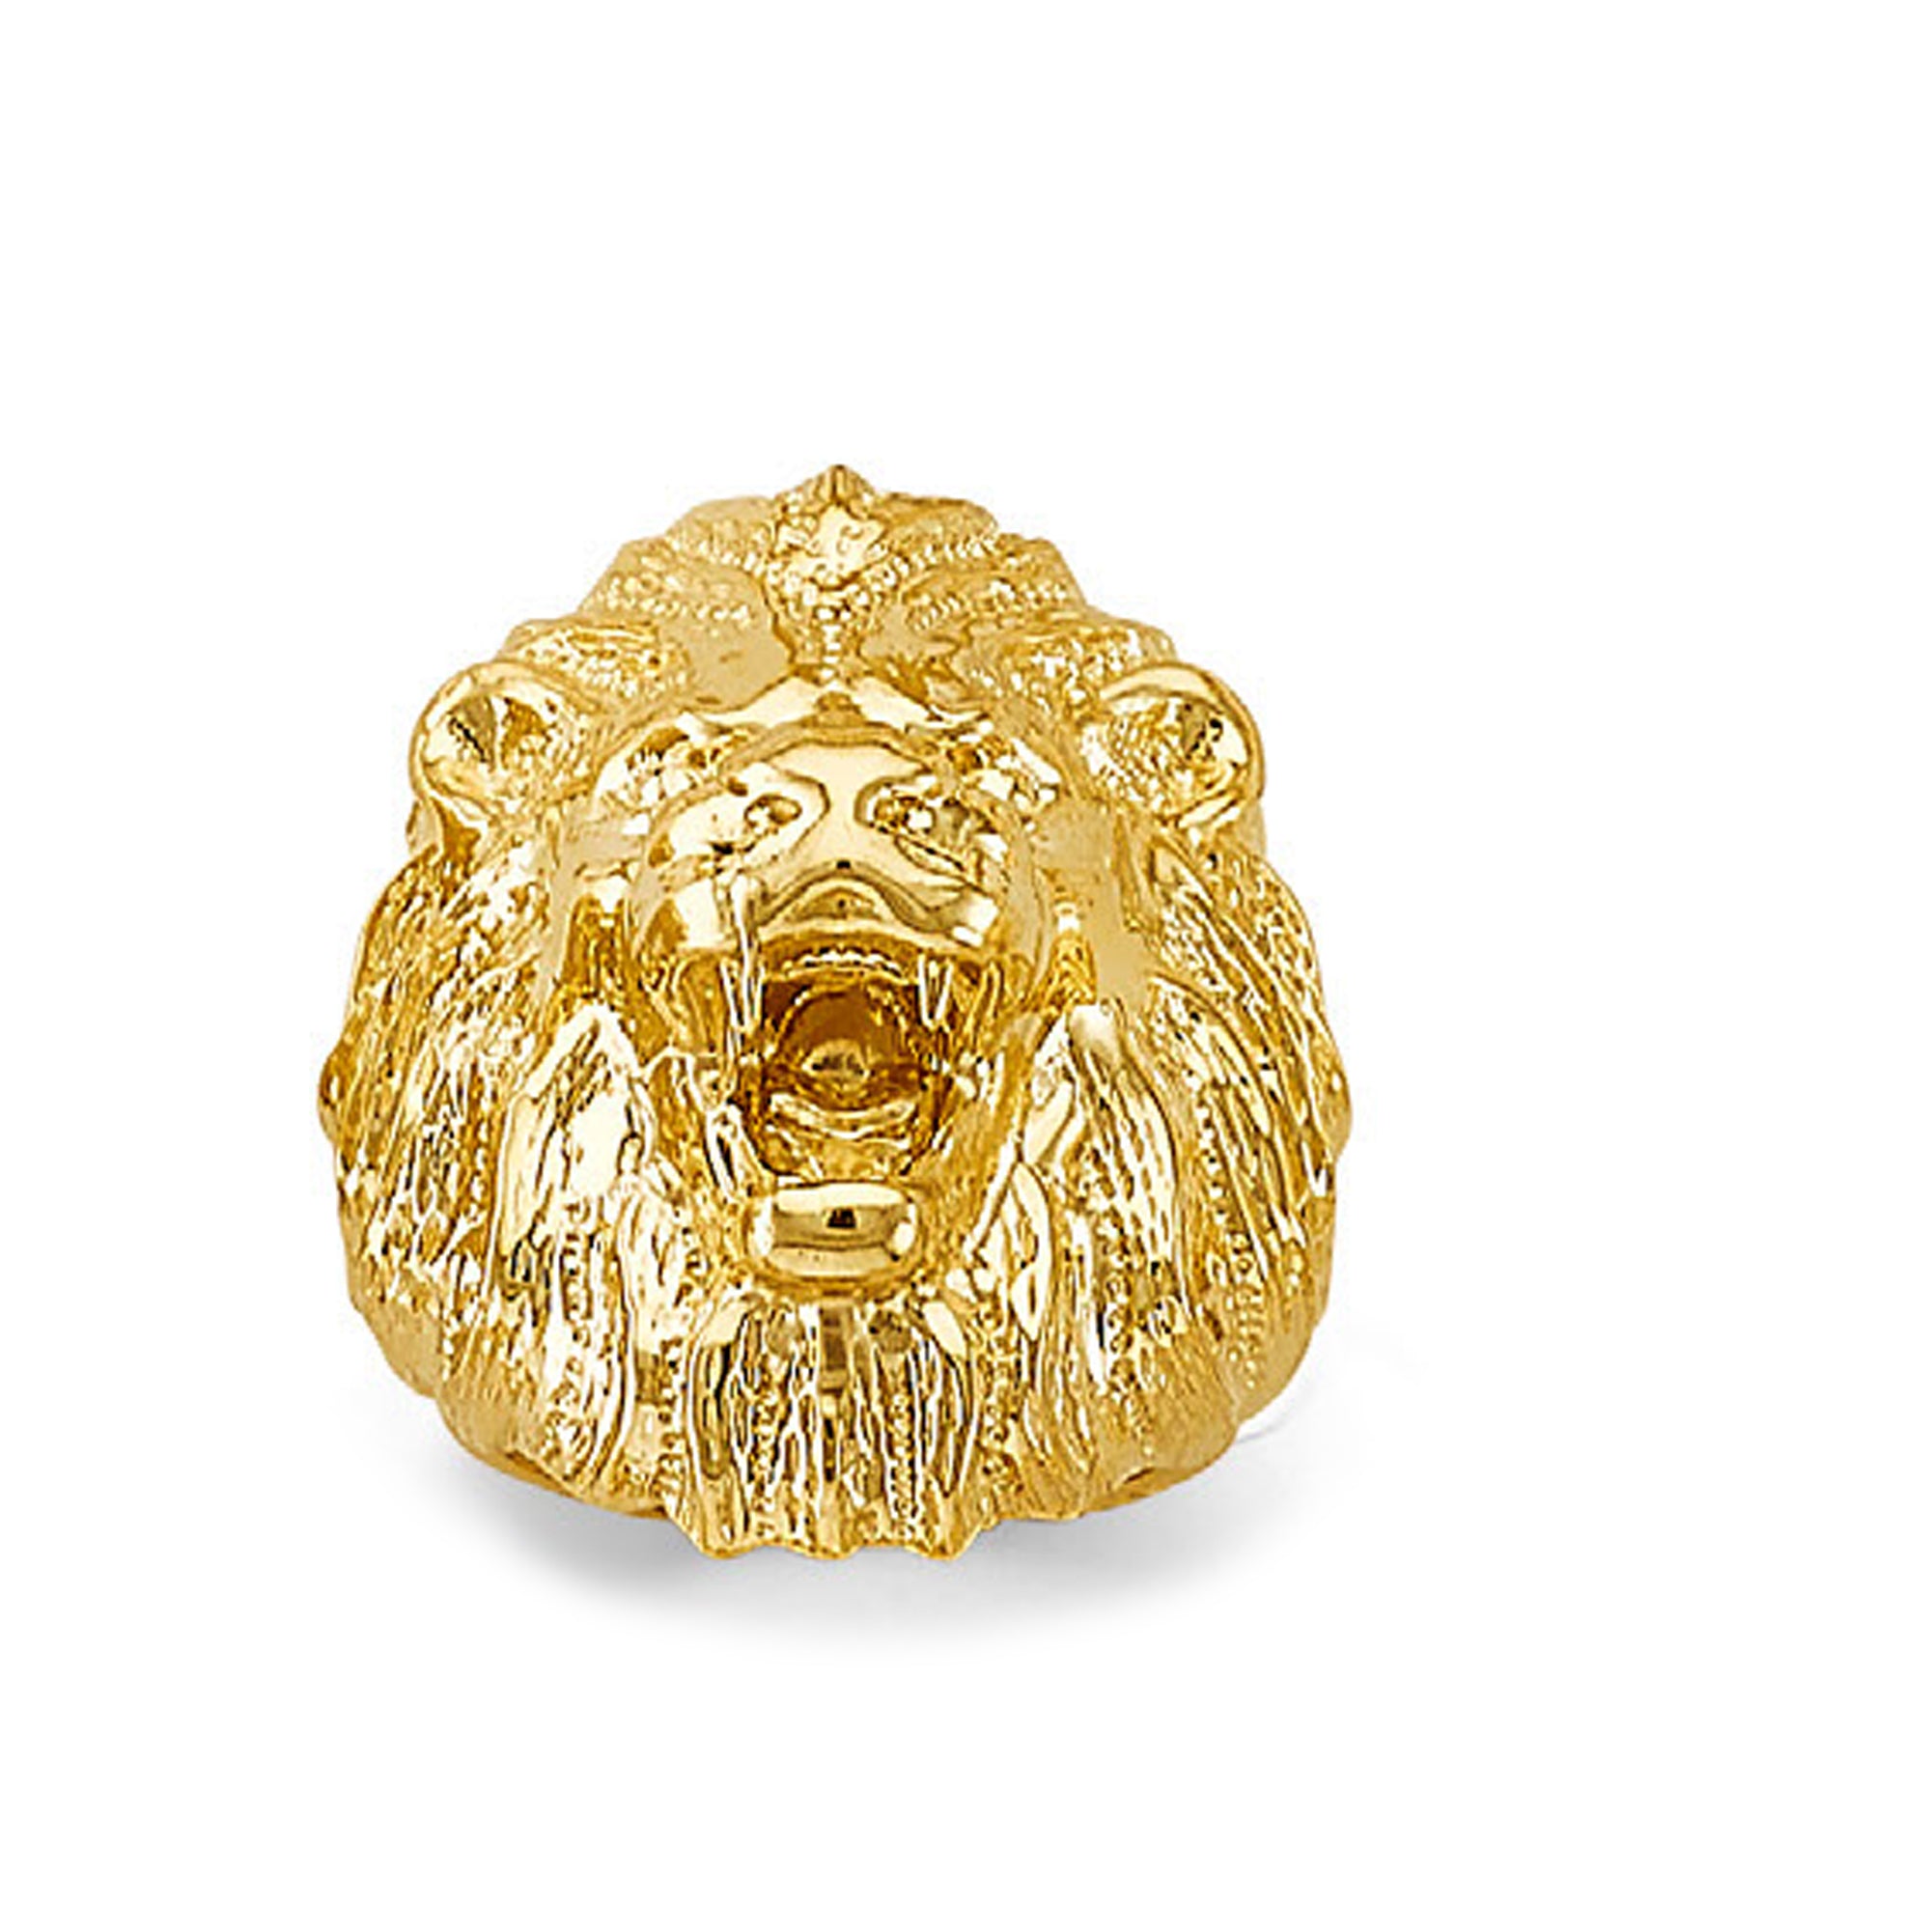 Fierce Roaring Lion Ring in Solid Gold 